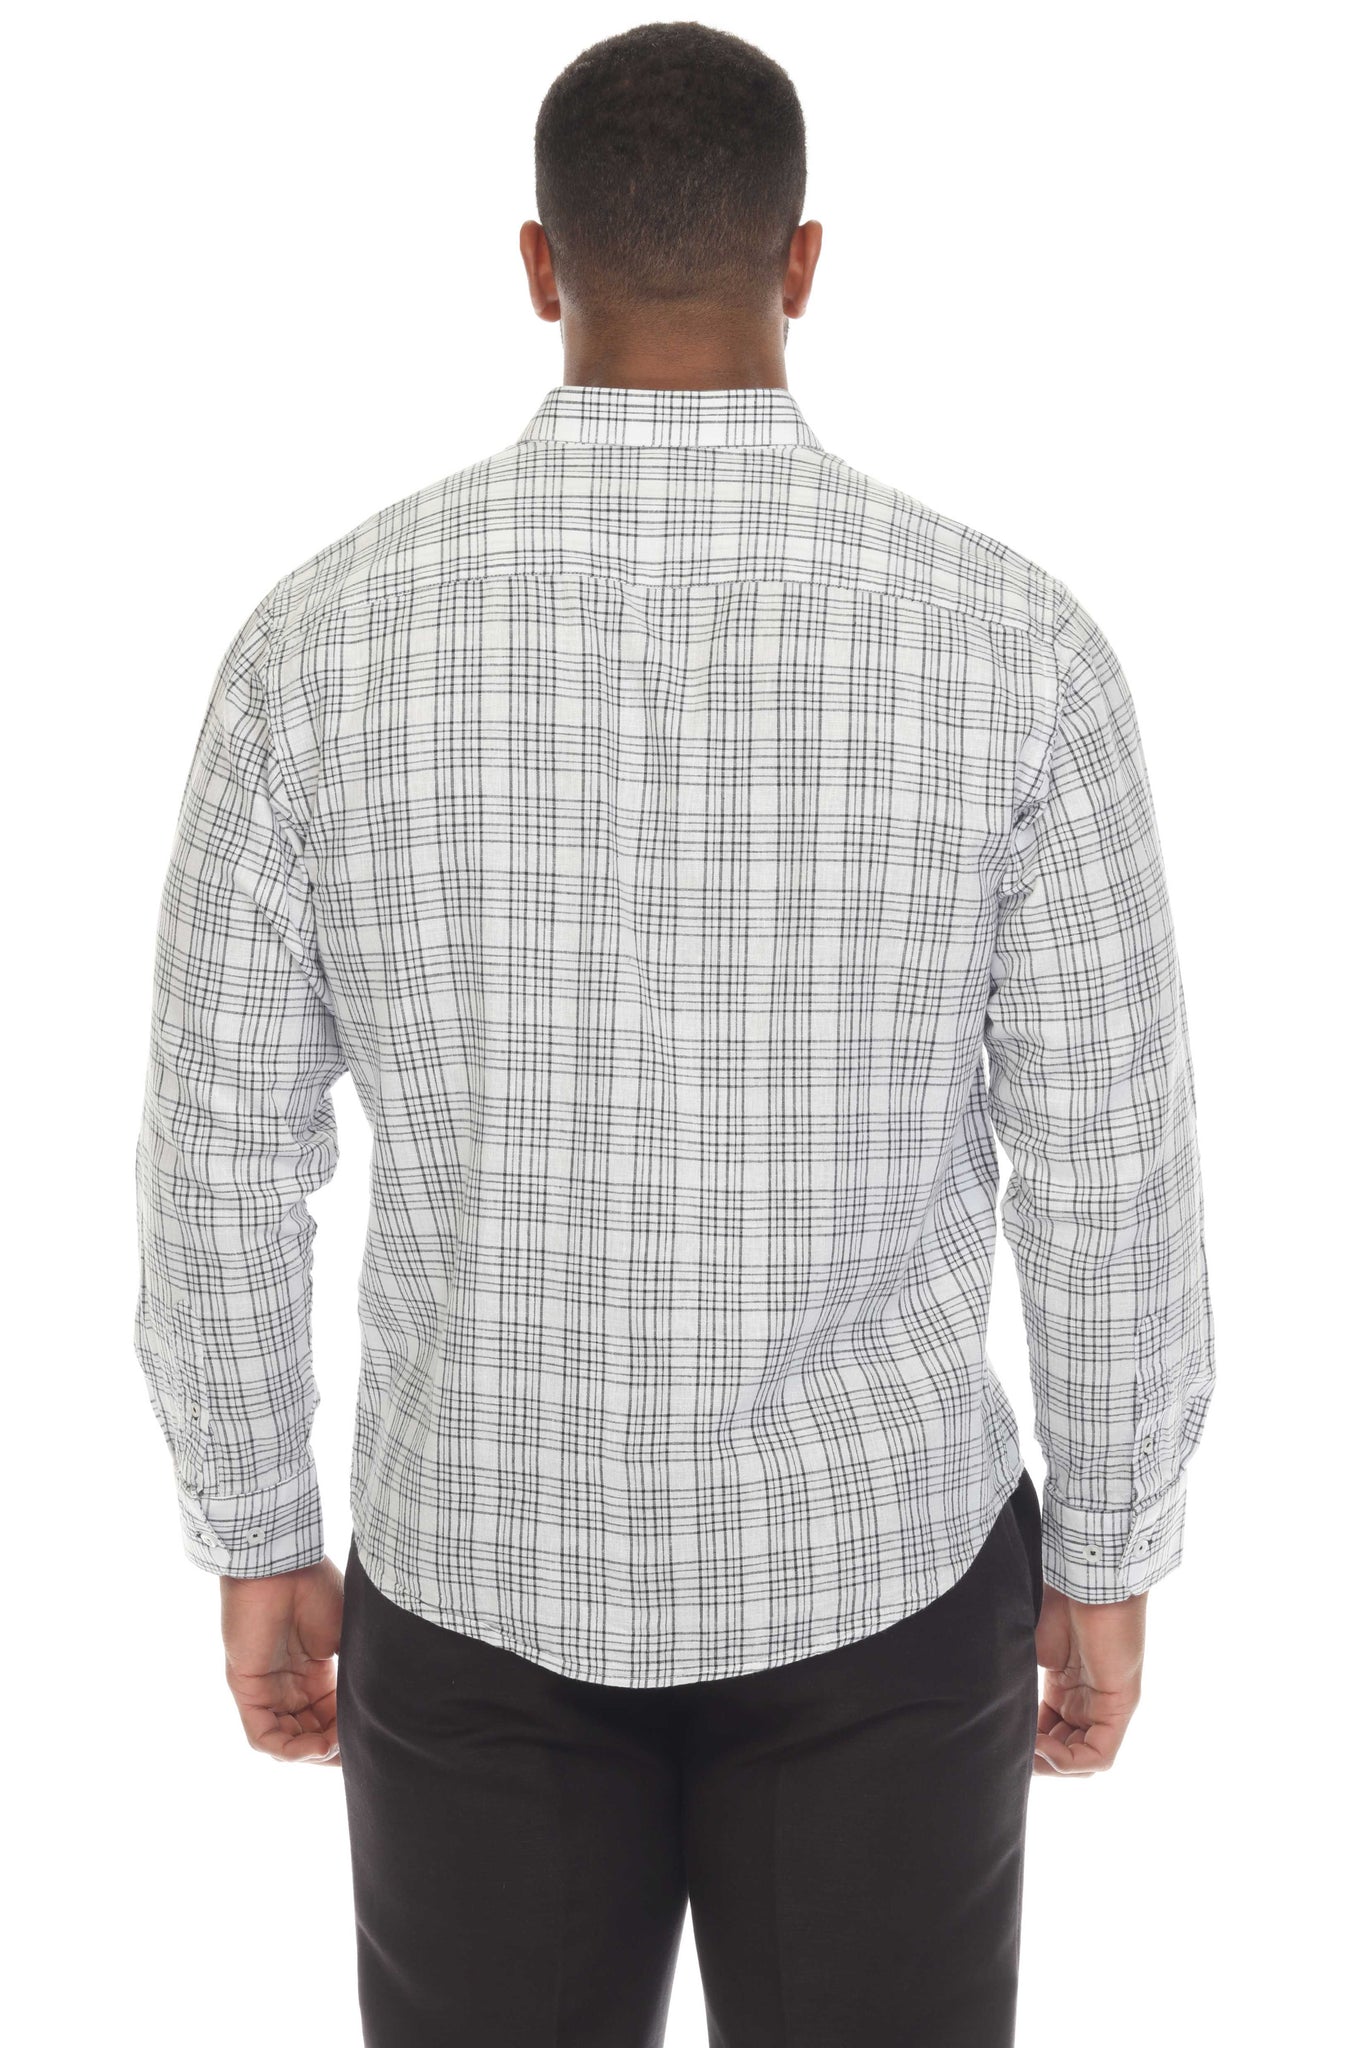 Mojito Slim Fit Casual Linen Blend Shirt Long Sleeve Checker Print Button Down